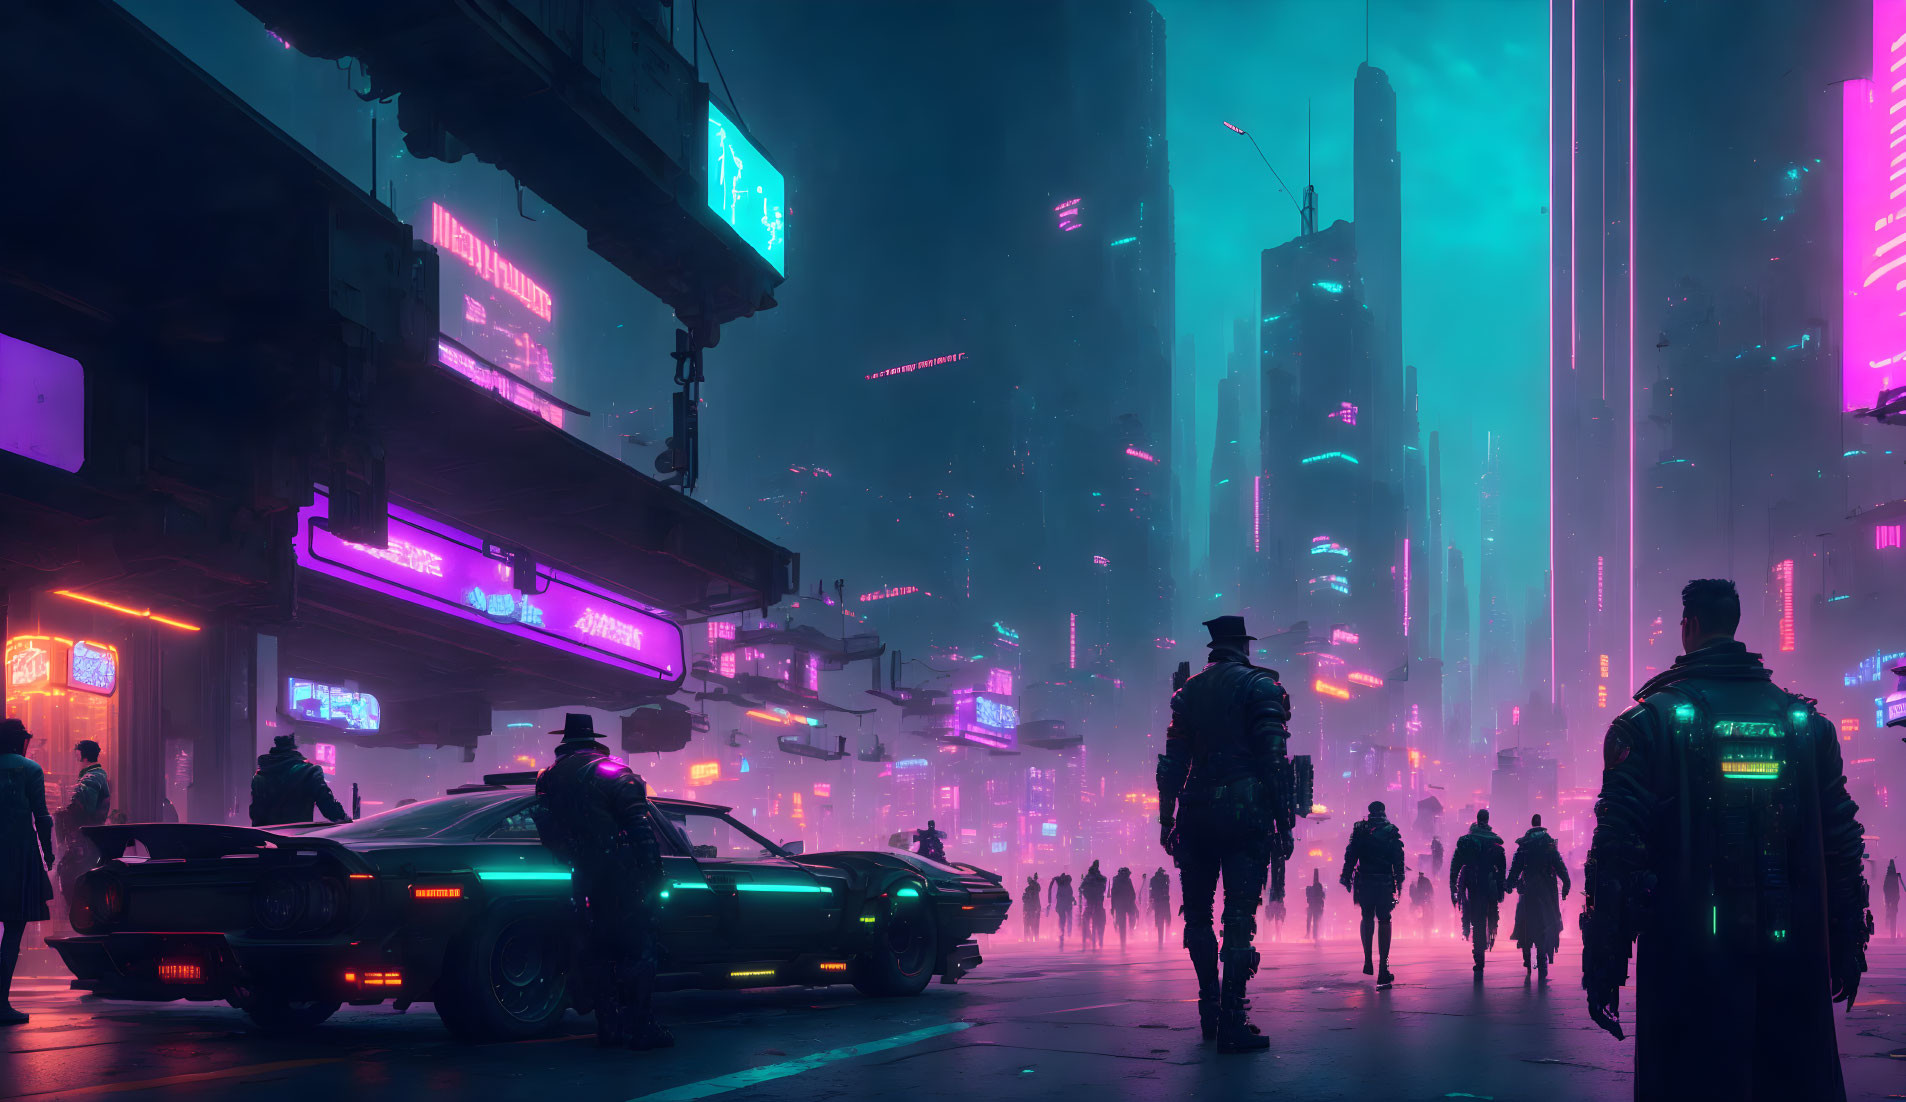 Future cyberpunk city